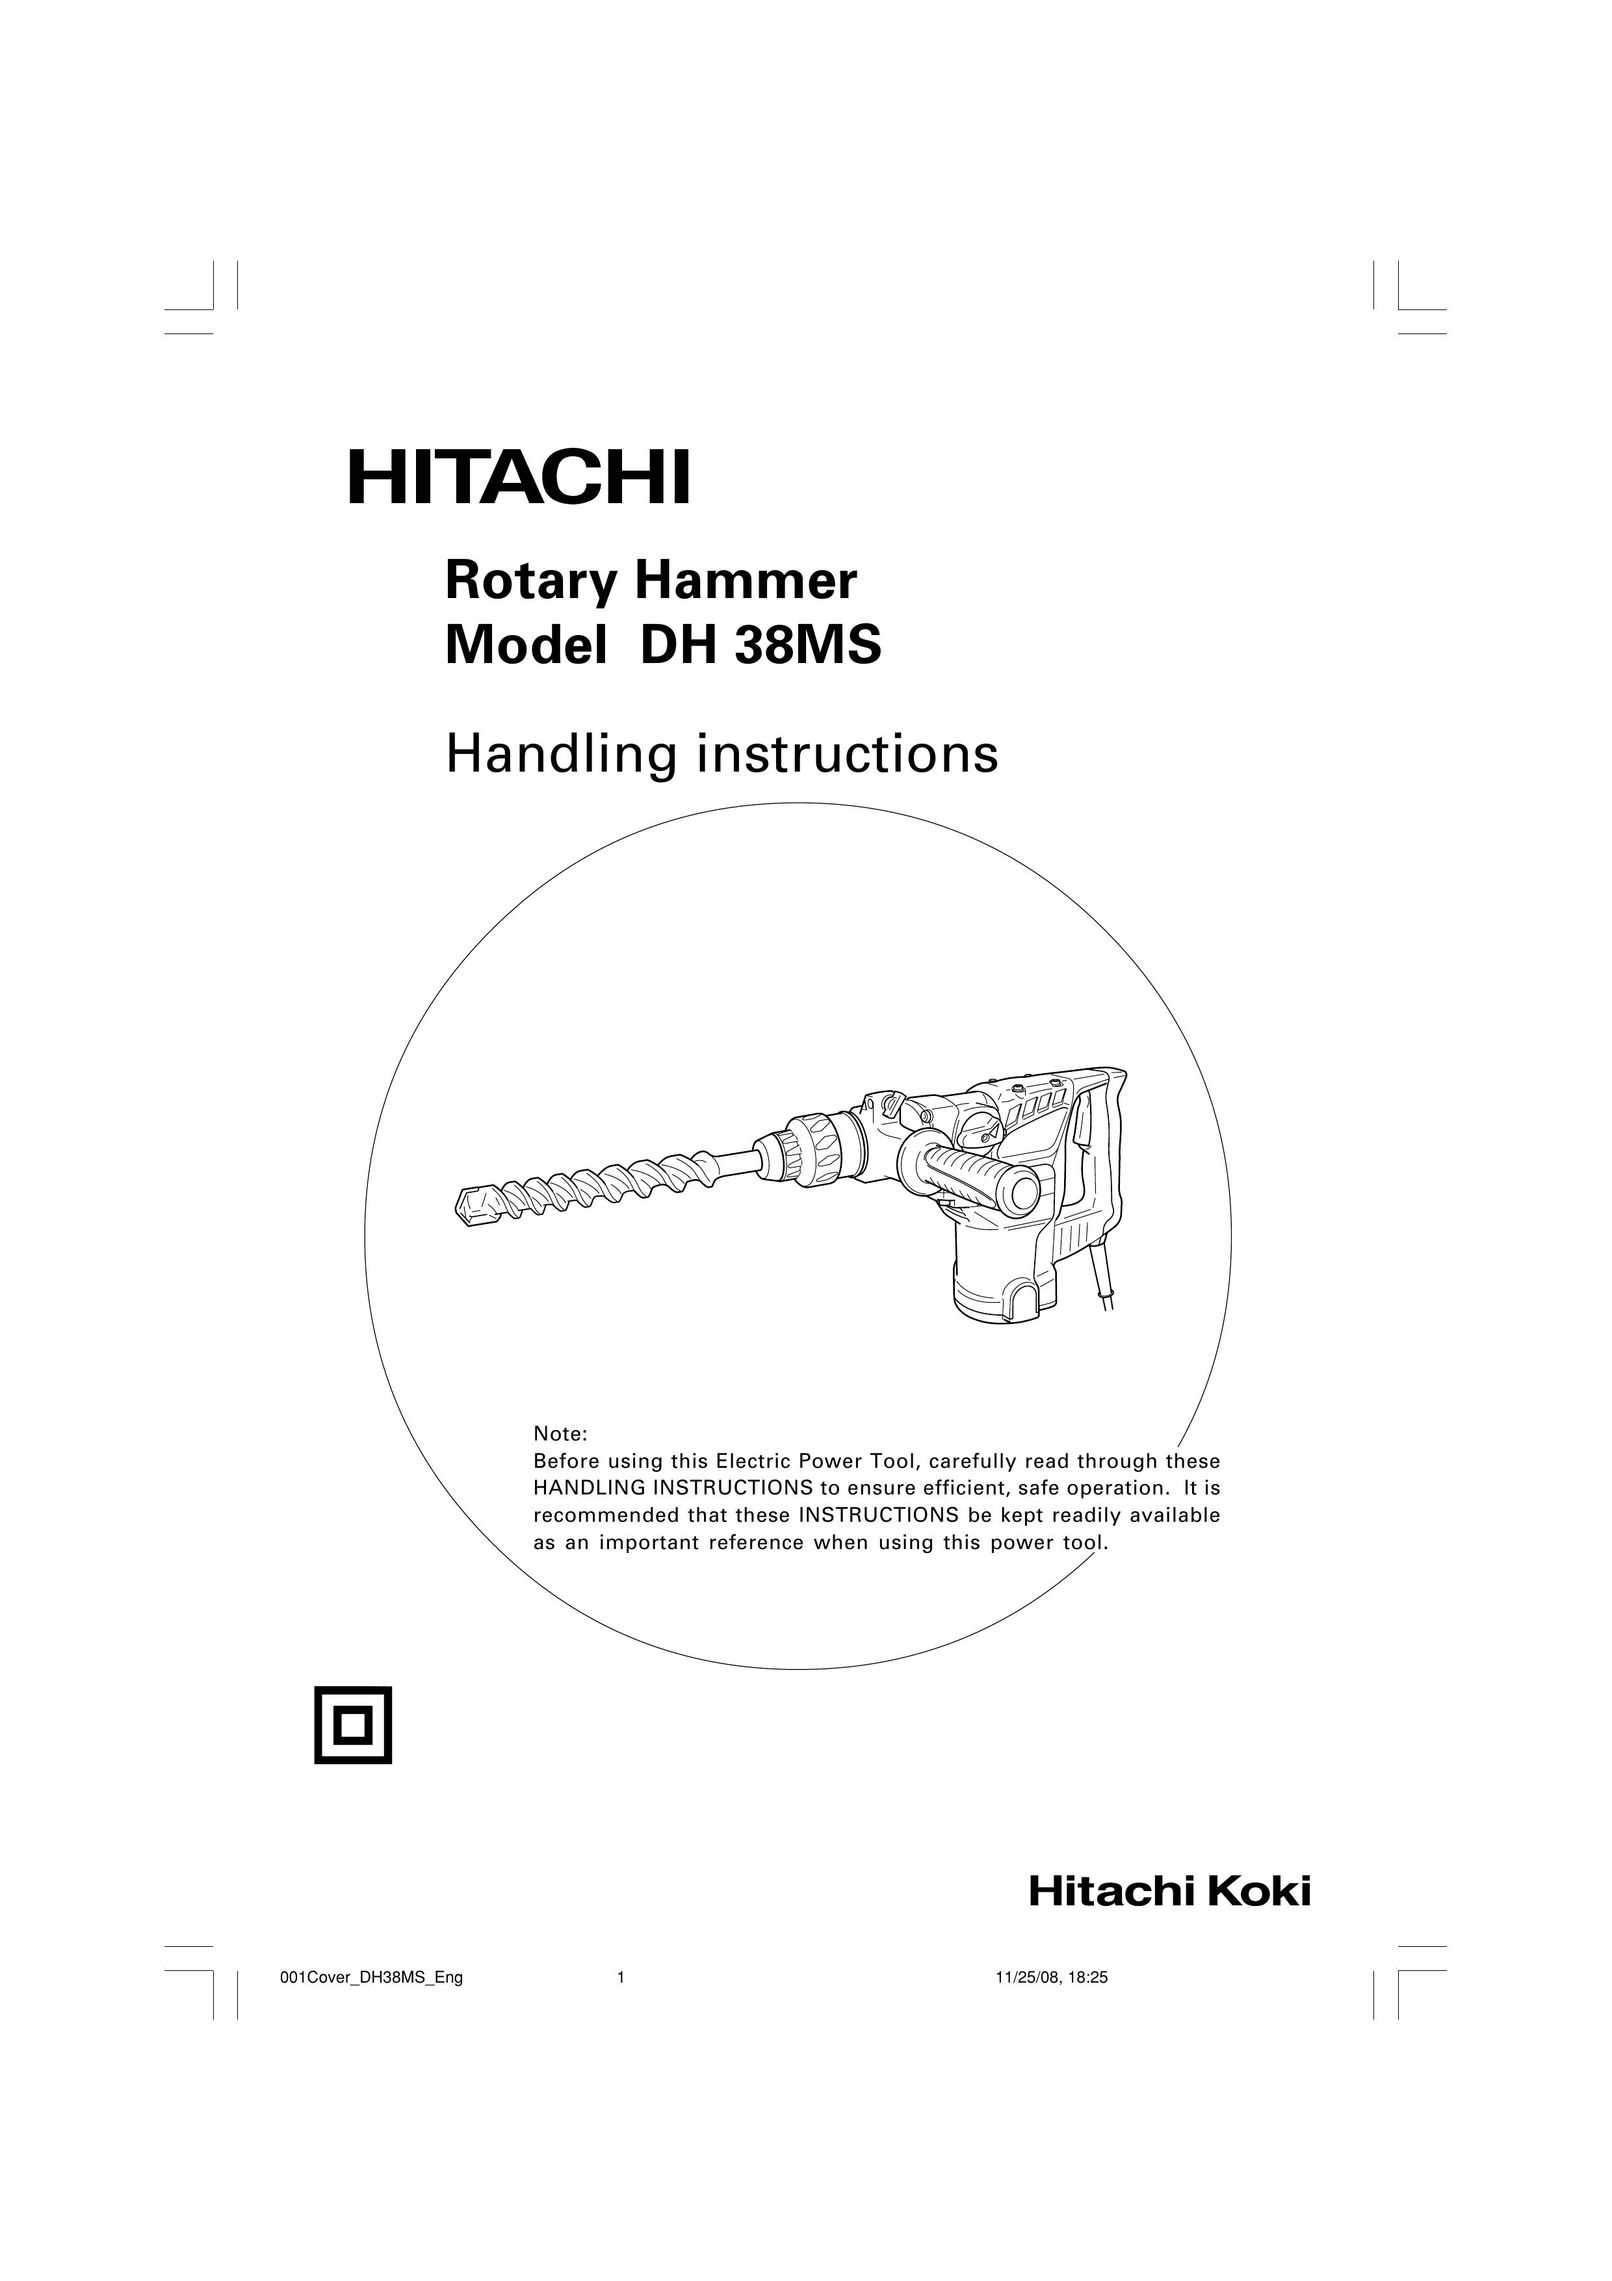 Hitachi DH 38MS Power Hammer User Manual